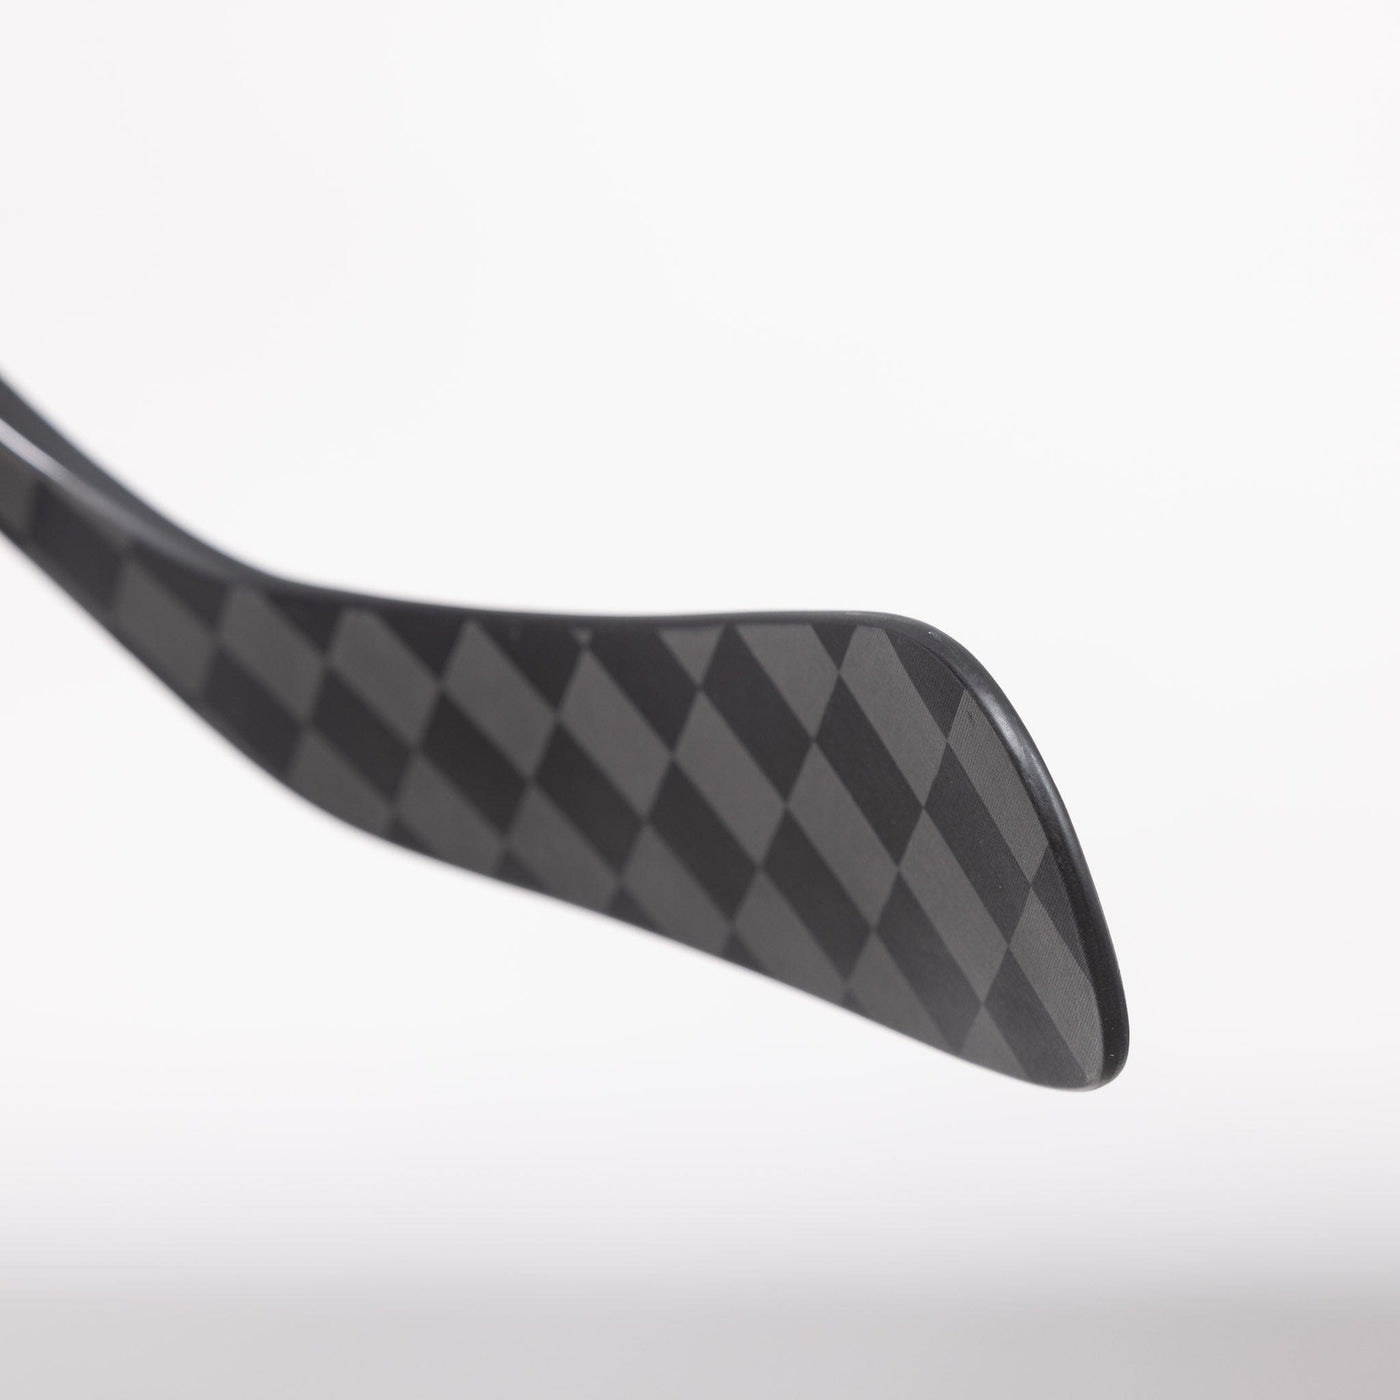 Warrior Super Novium Pro Junior Hockey Stick - 50 Flex - The Hockey Shop Source For Sports